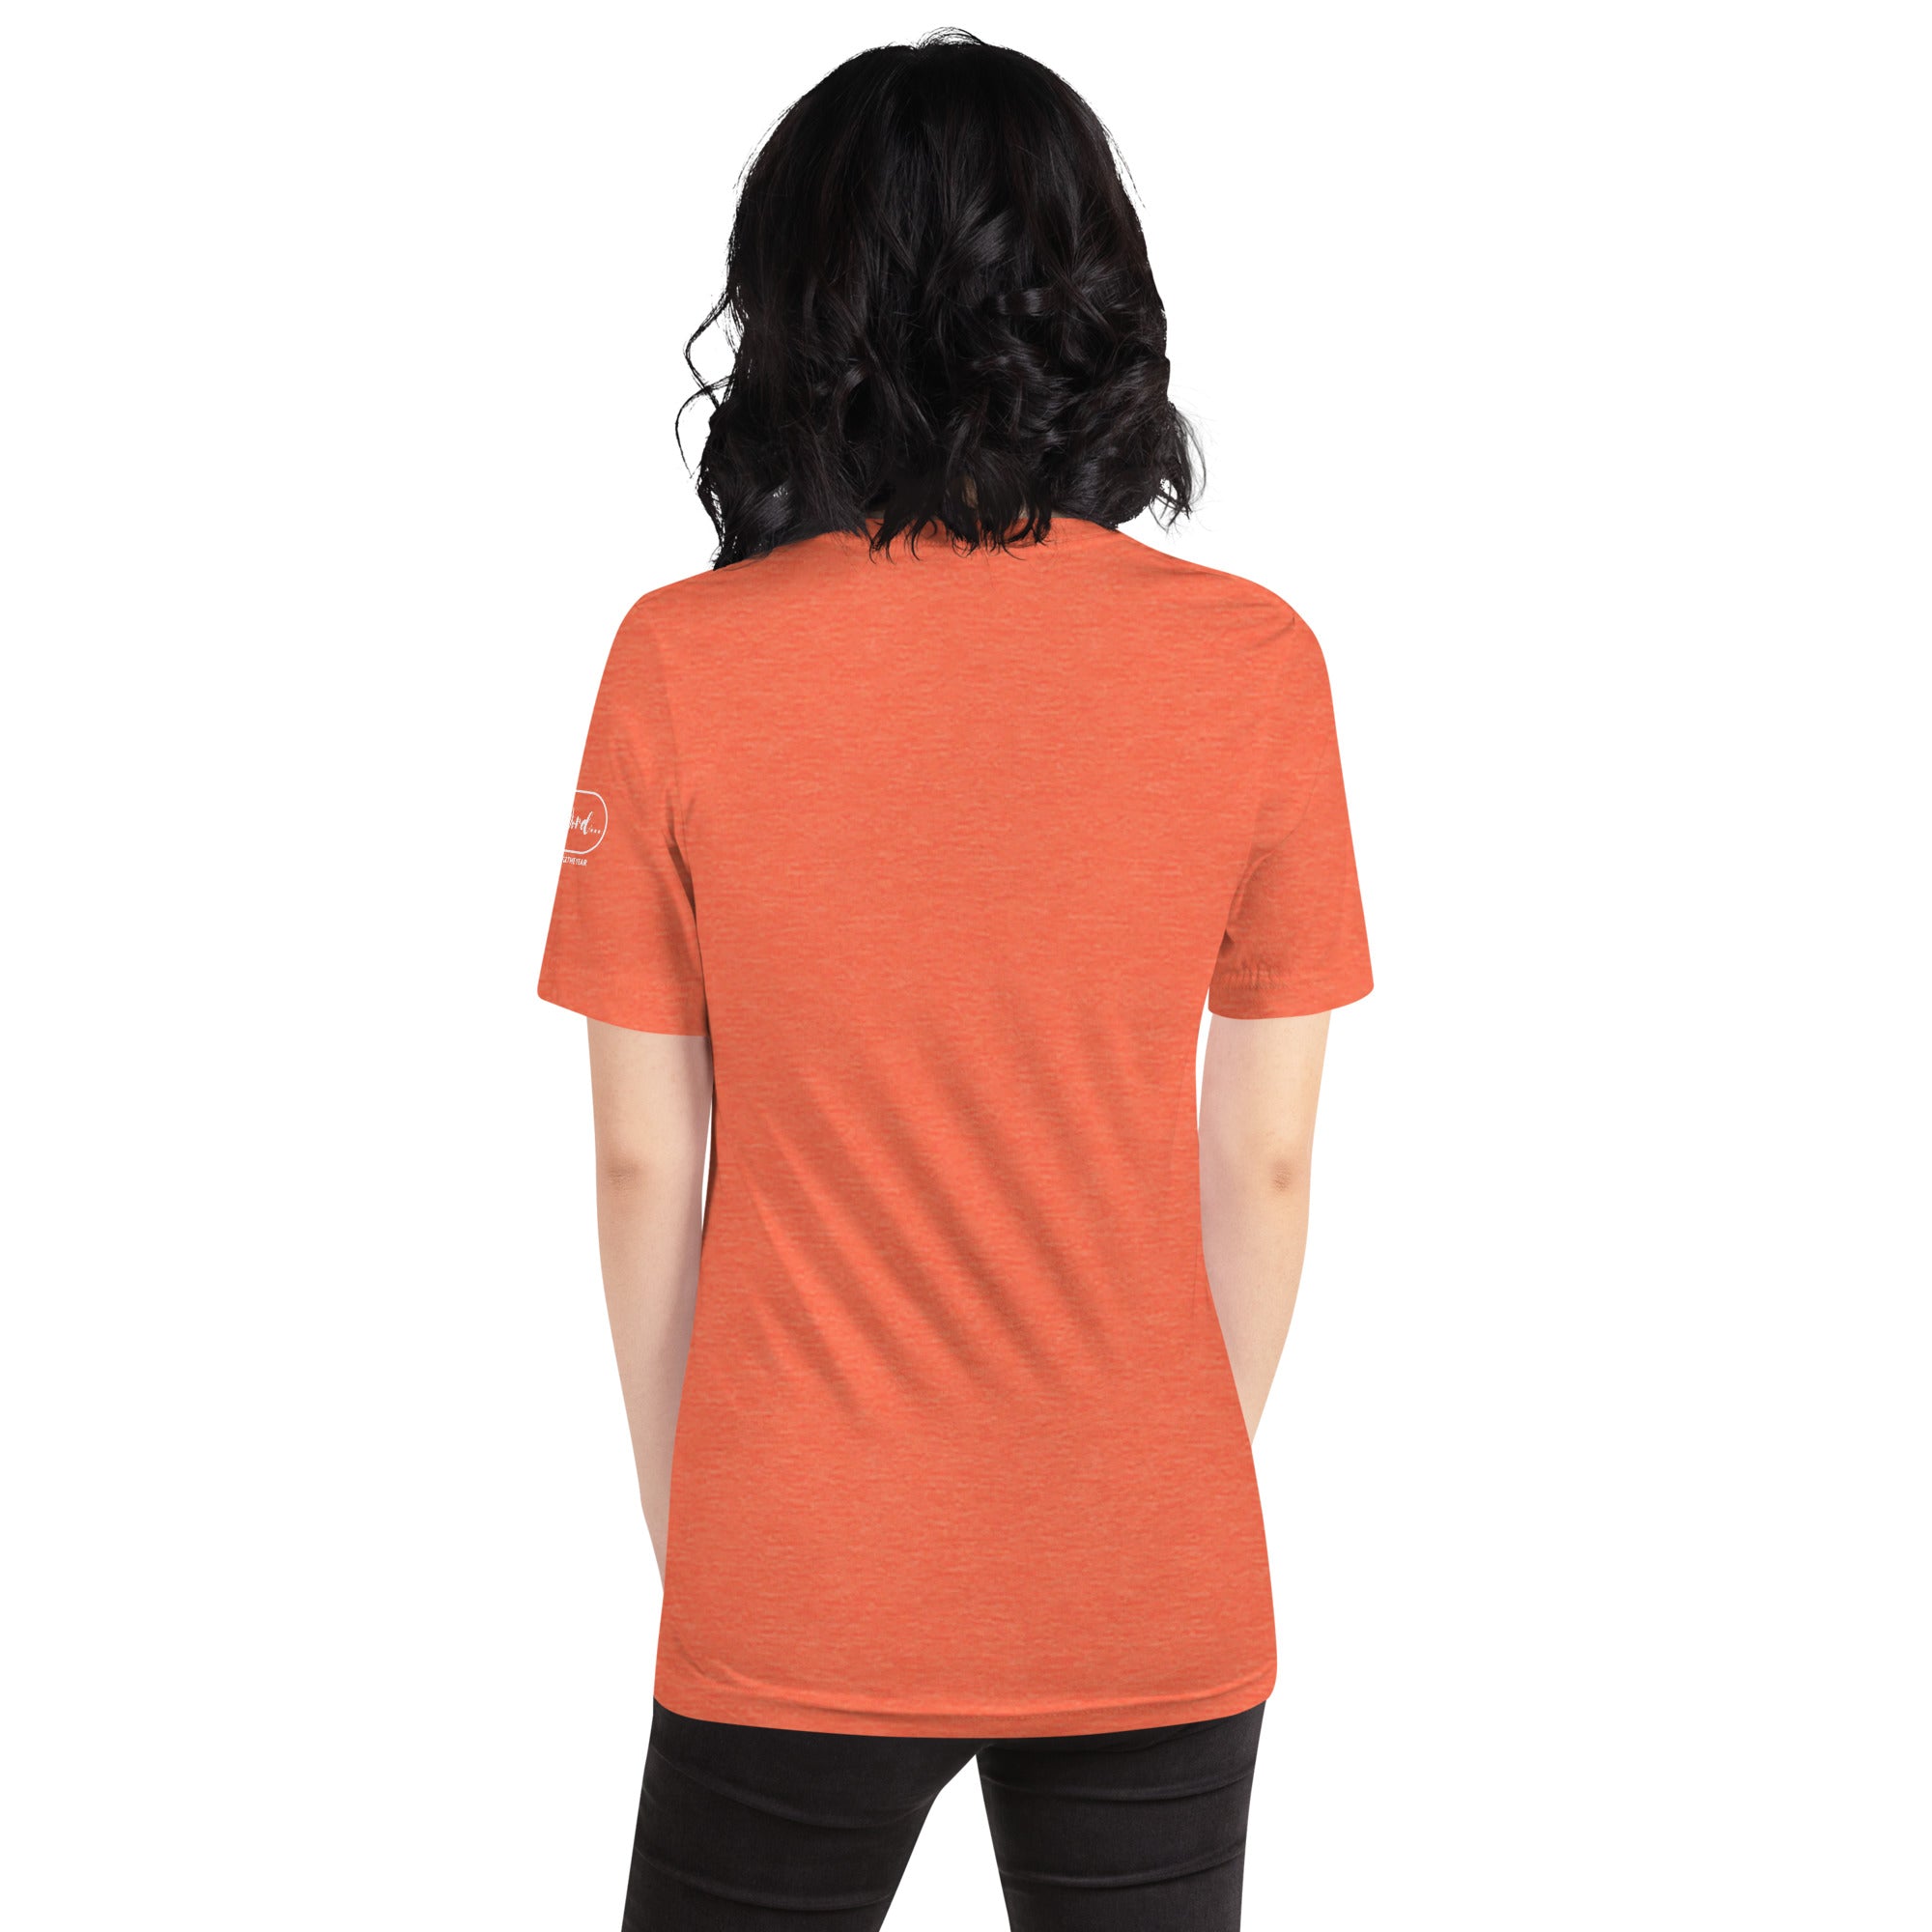 Alignment-Inspired T-shirt | Faith Apparel | One-Word Unisex T-shirt